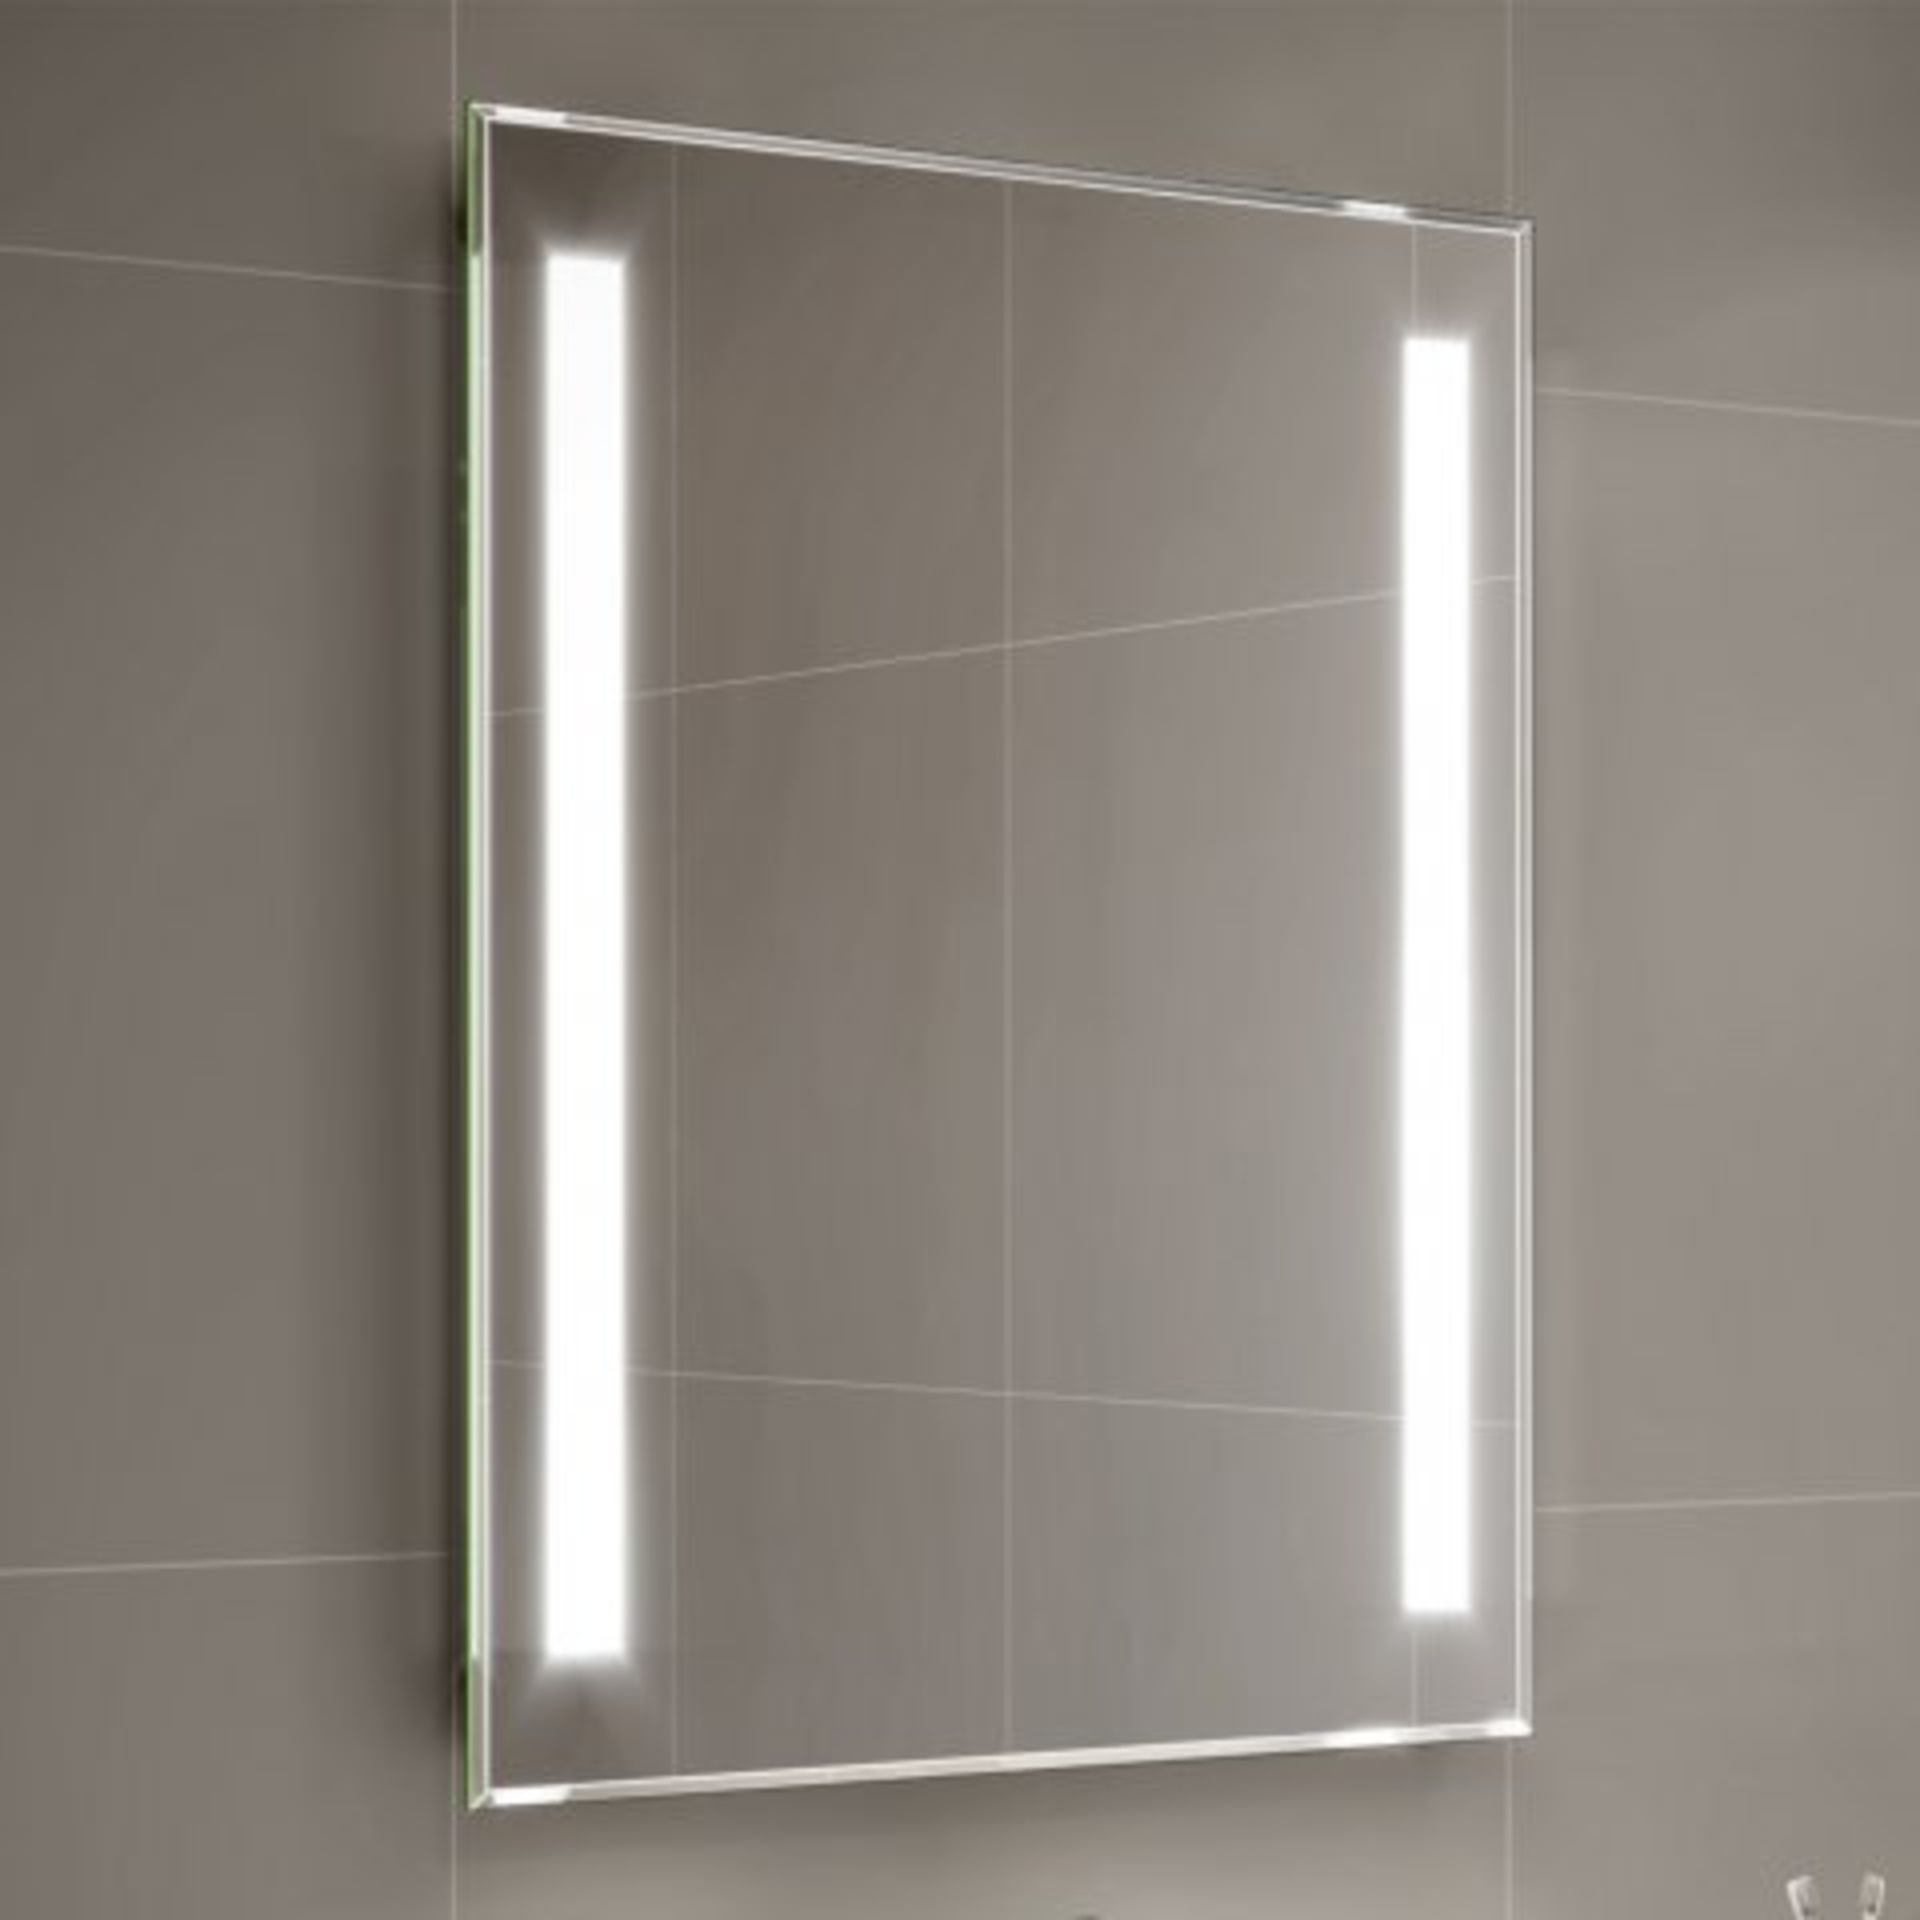 (T52) 600x800mm Omega Illuminated LED Mirror RRP £349.99 LED Power The LED gives instant - Image 3 of 4